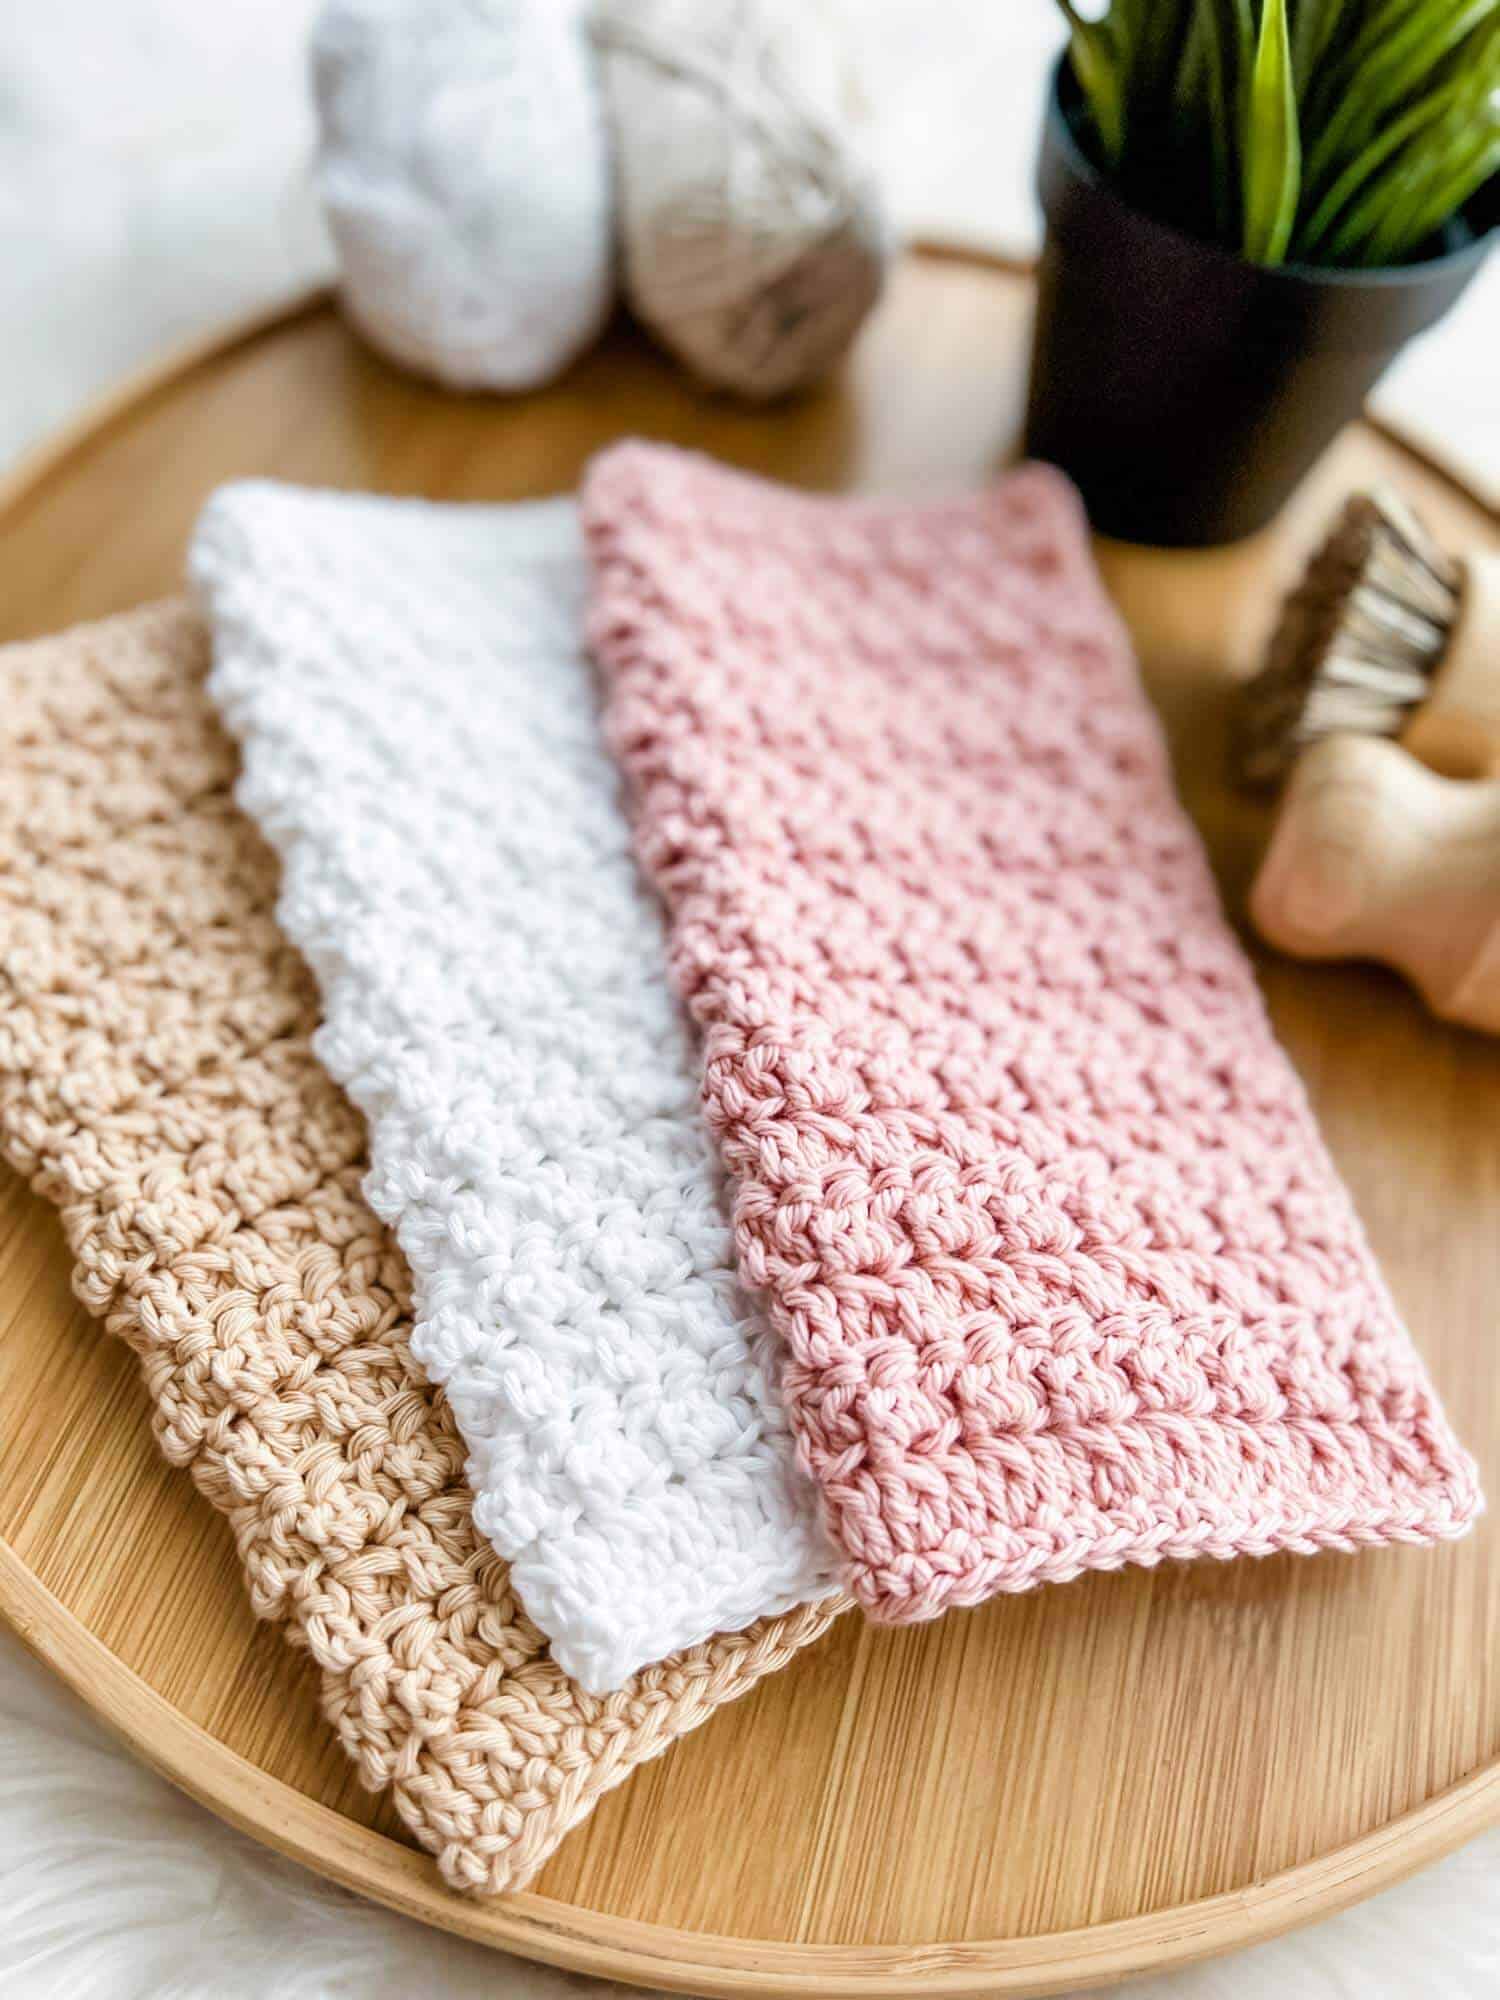 Textured Dishcloth Crochet Pattern